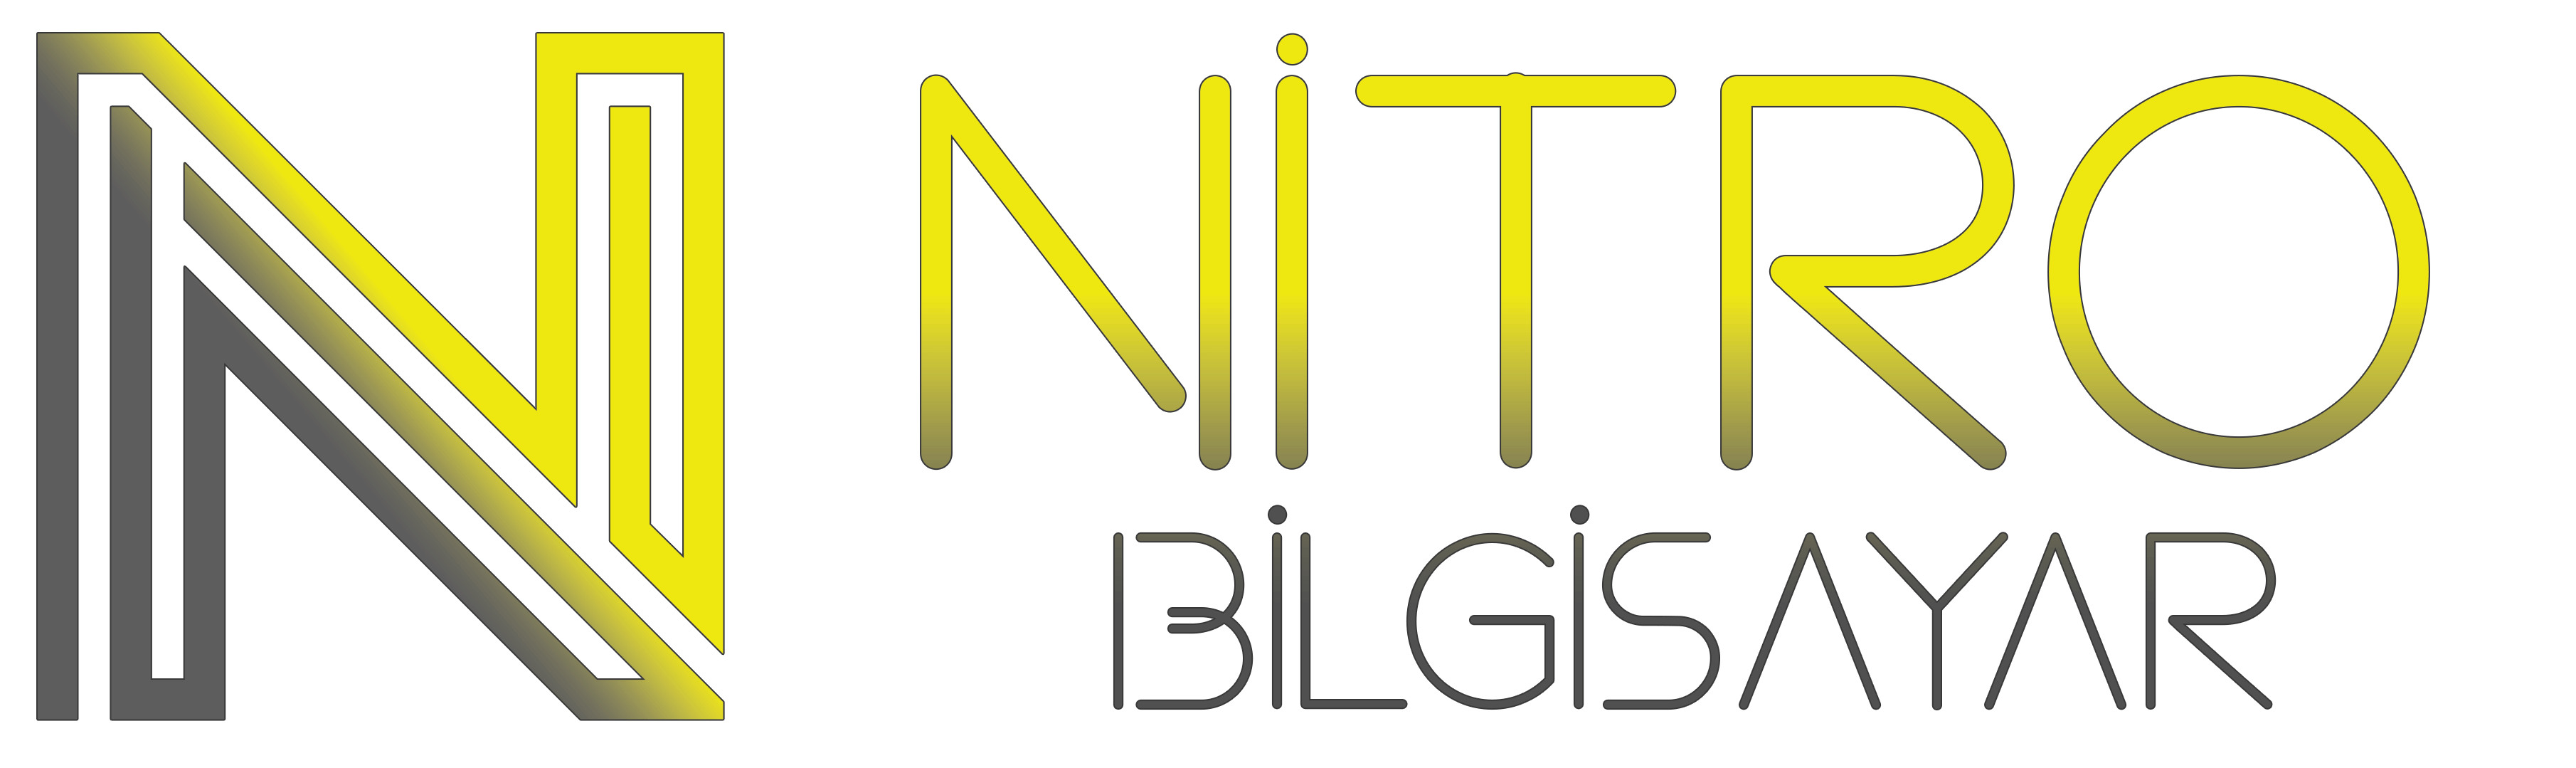 Nitro Bilgisayar Logo Yeni